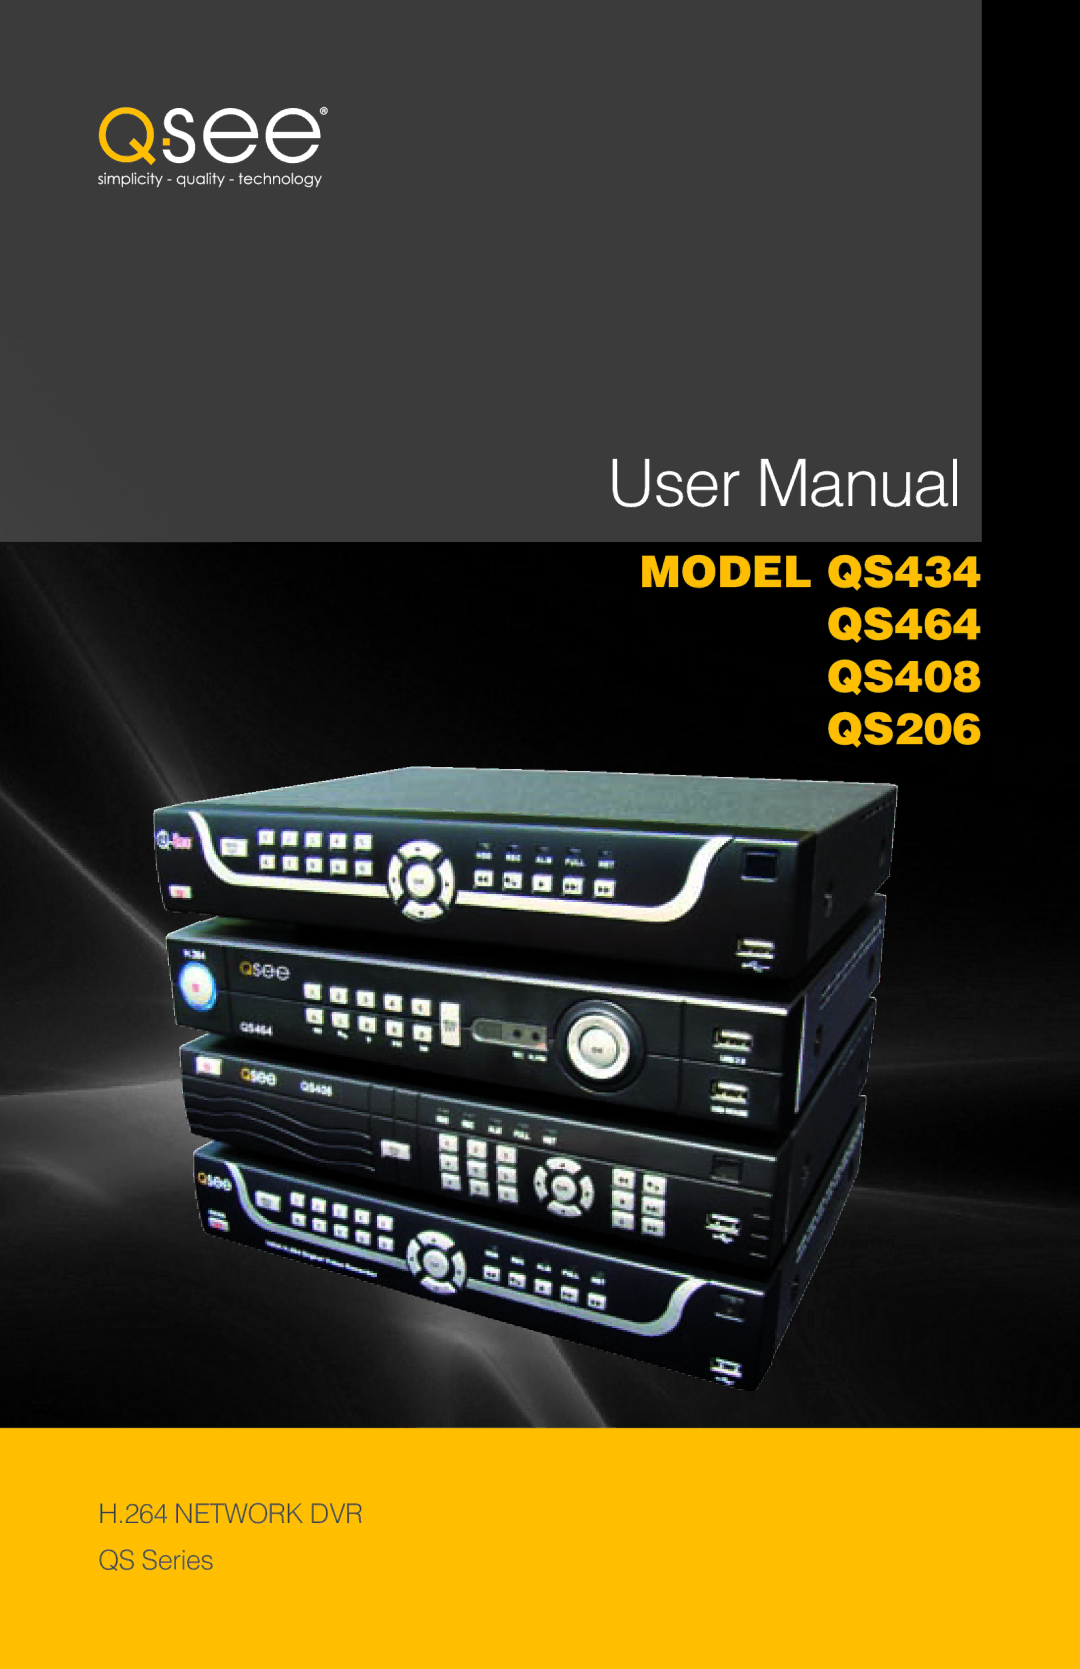 Q-See QS206, QS464, QS408 user manual Model QS434 